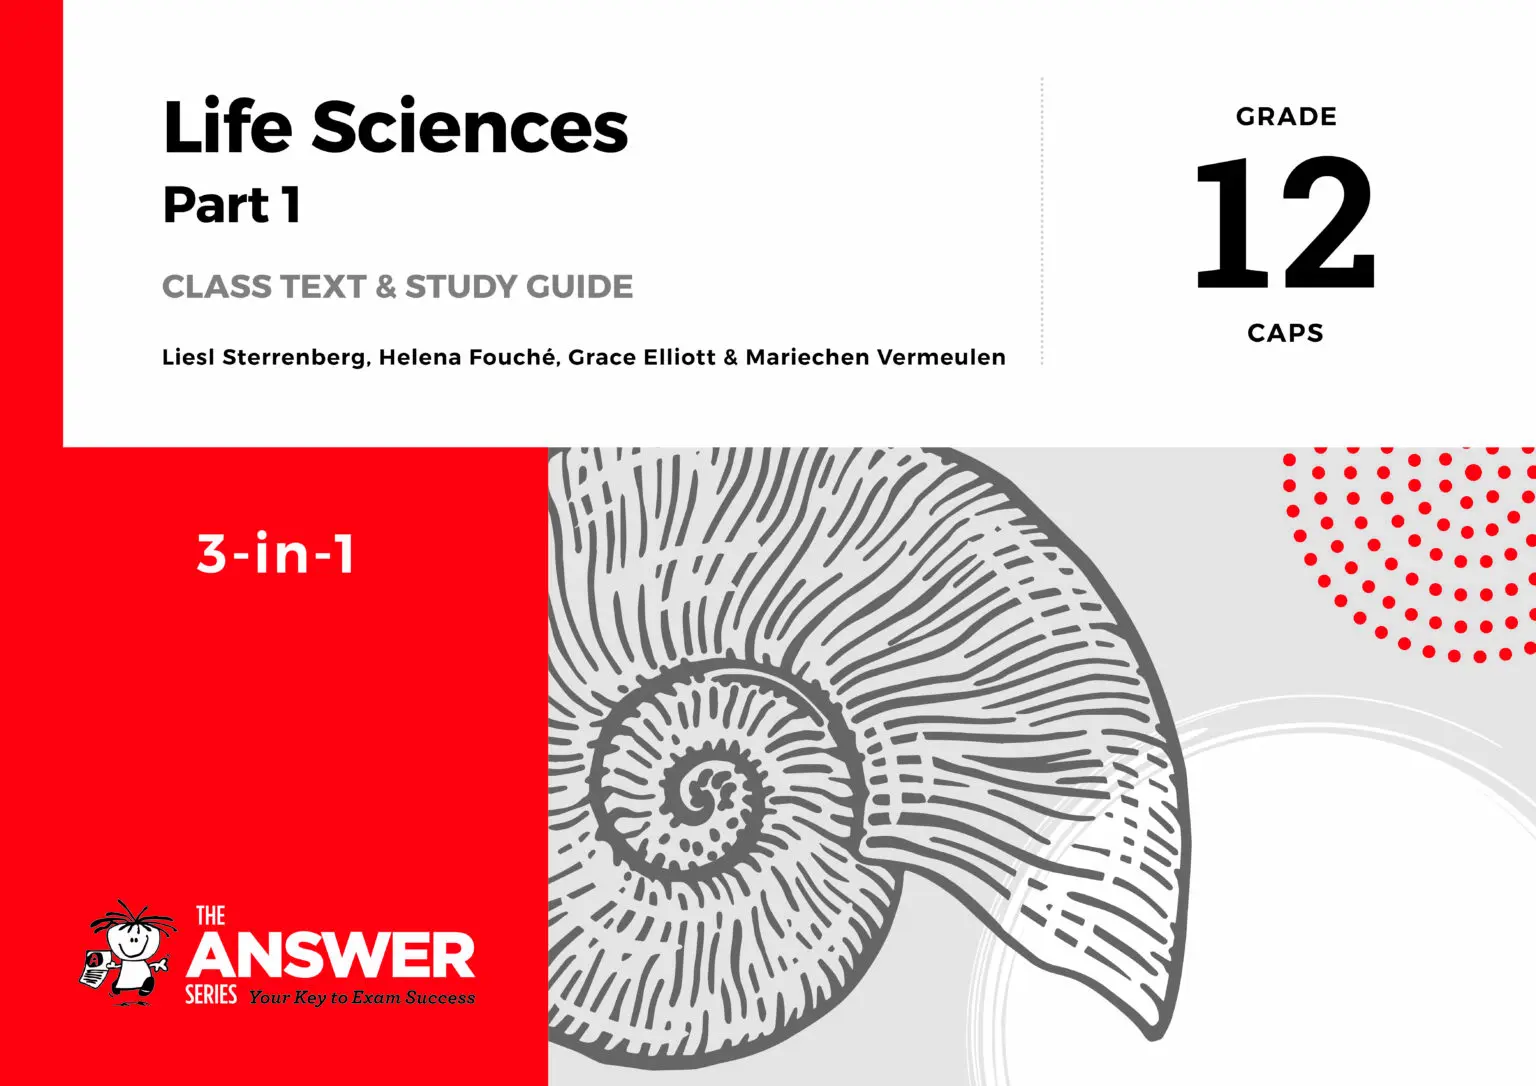 life sciences assignment grade 12 august 2022